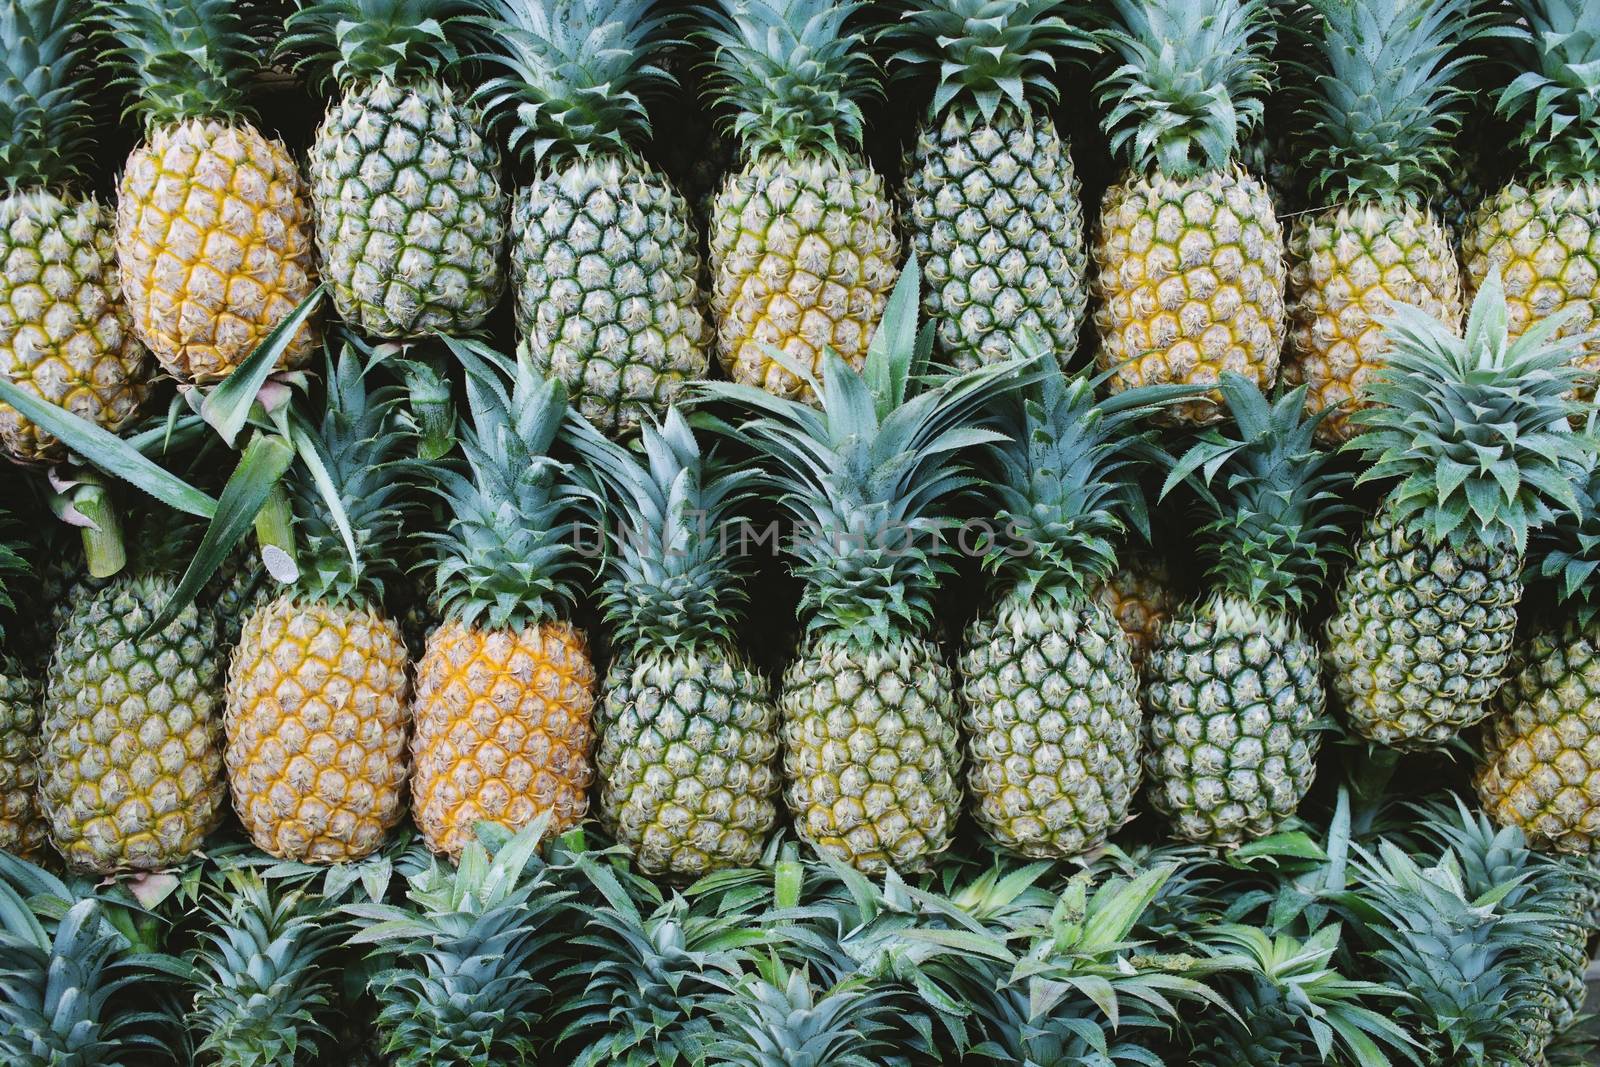 Pineapple in Supermarket Store